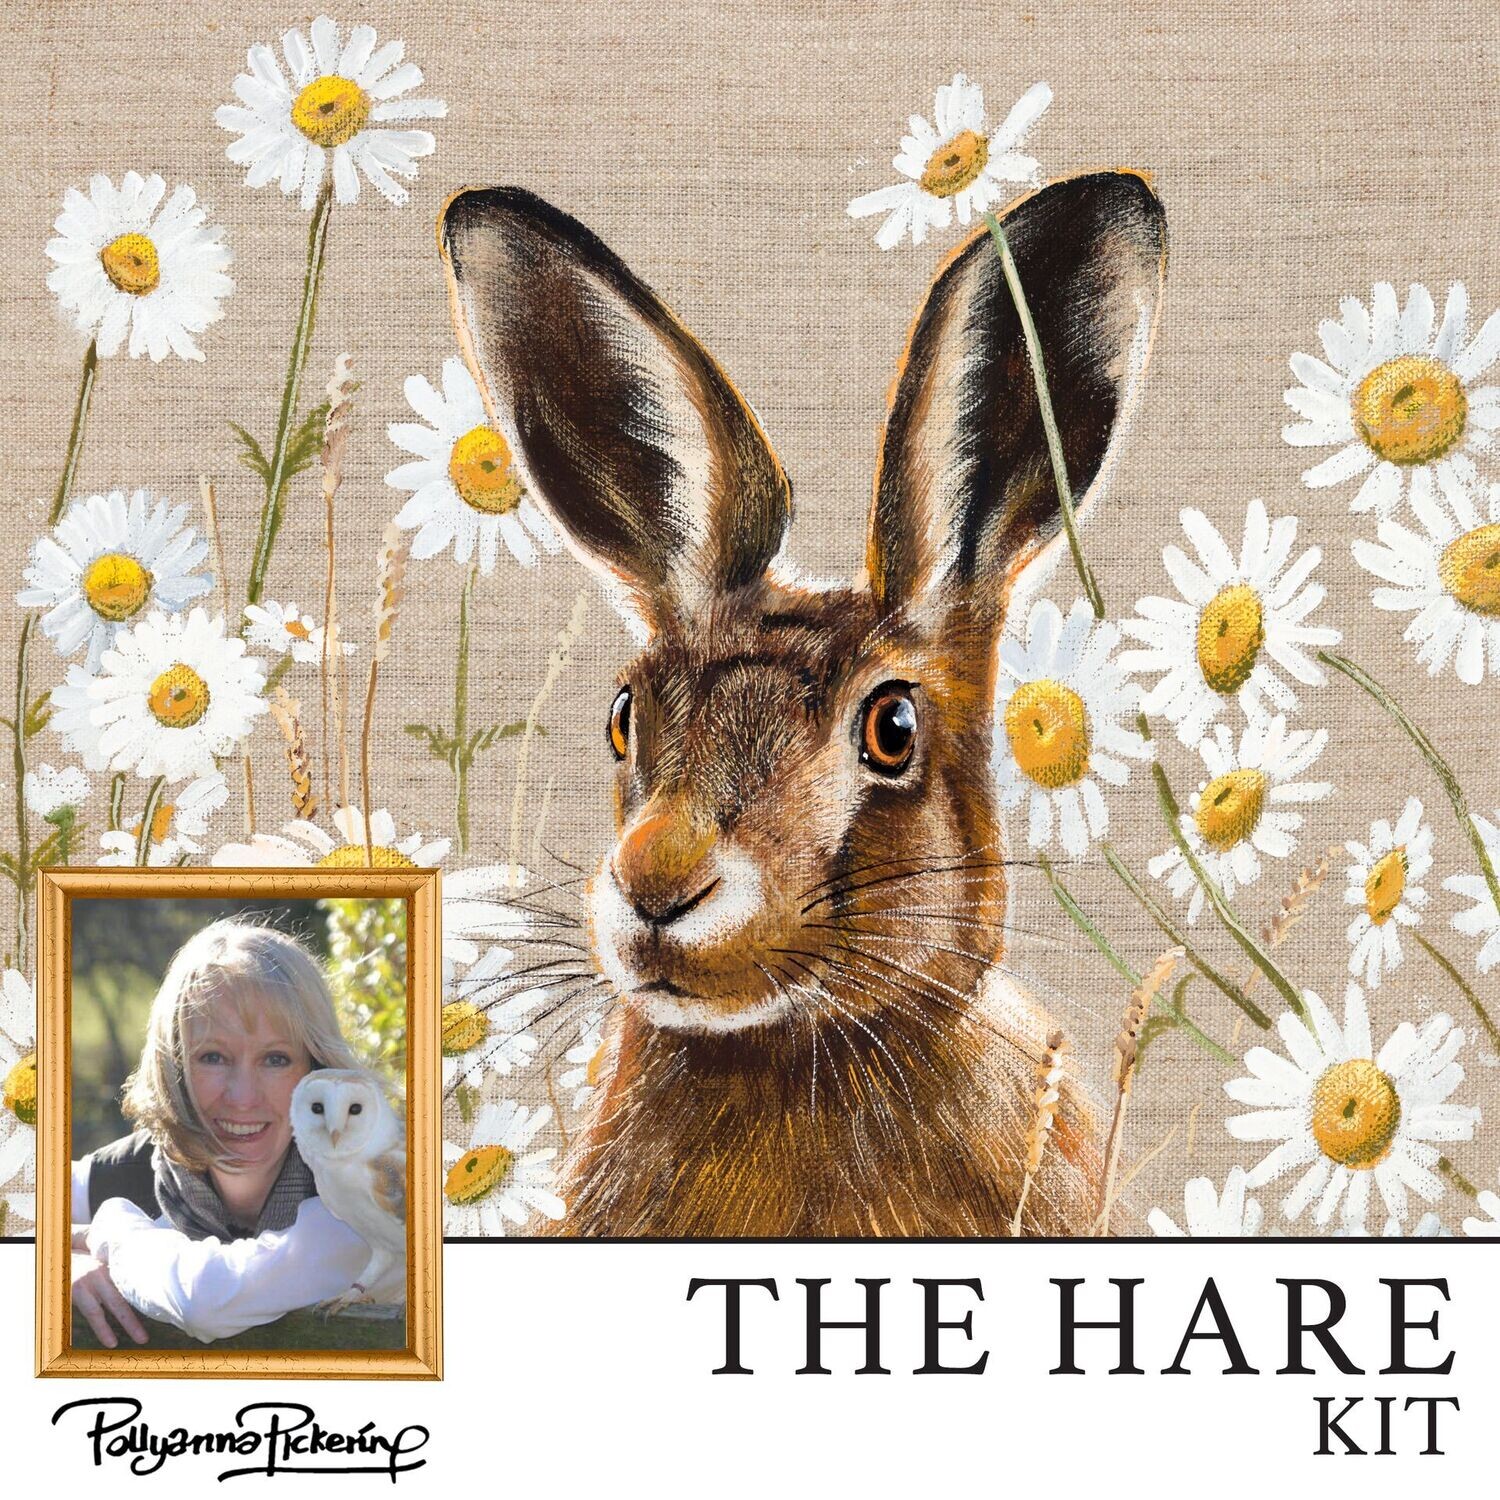 Pollyanna Pickering's The Hare Digital Kit